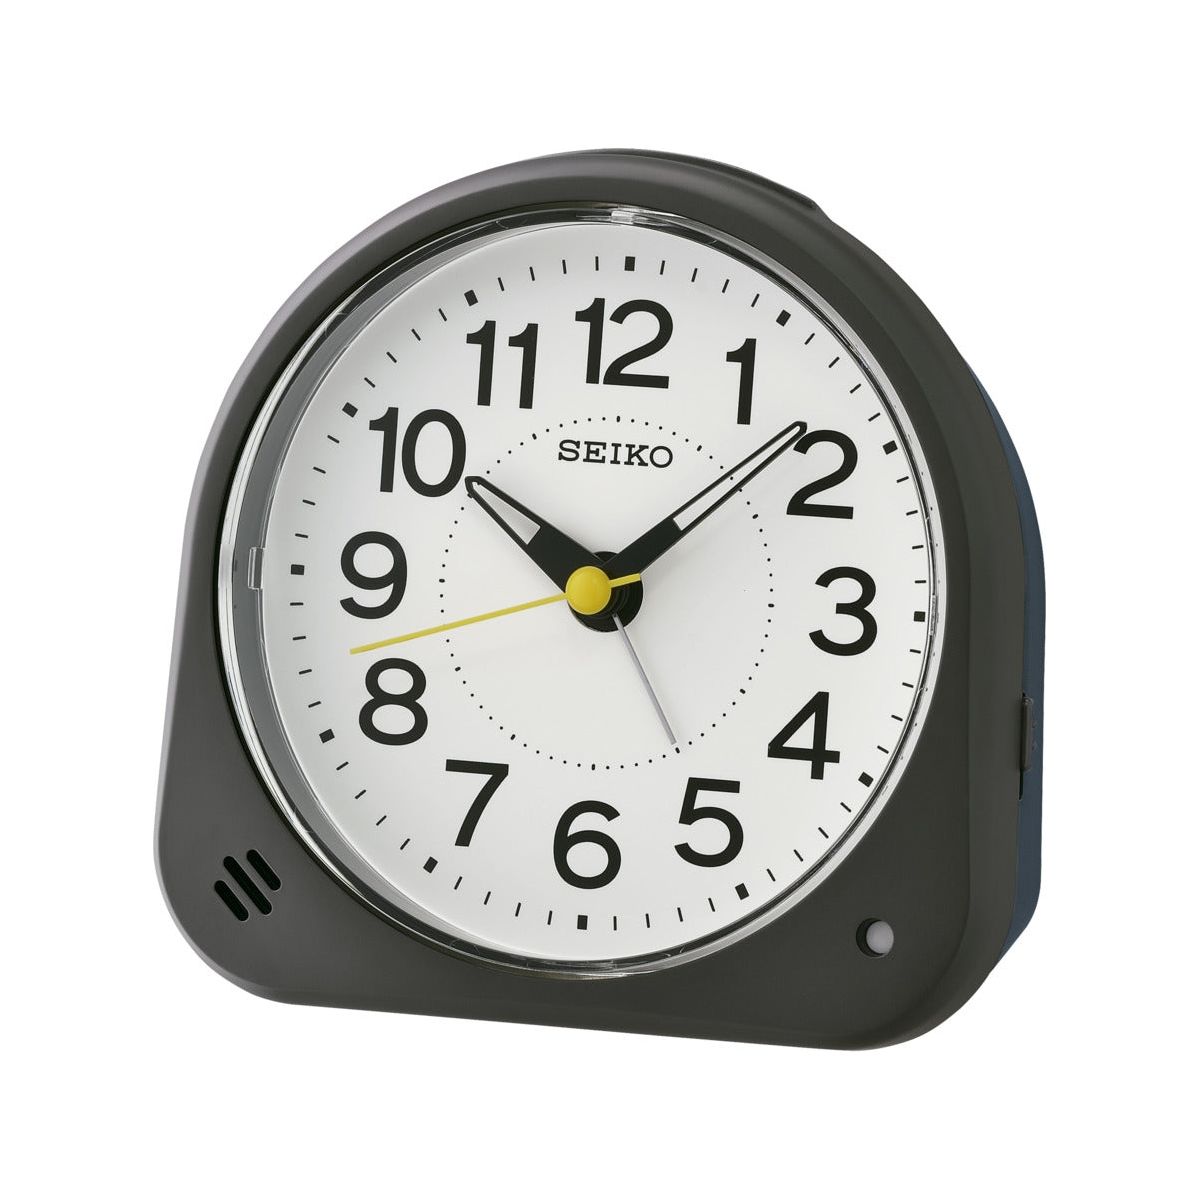 SEIKO CLOCKS SEIKO CLOCKS WATCHES Mod. QHE188K WATCHES seiko-clocks-watches-mod-qhe188k